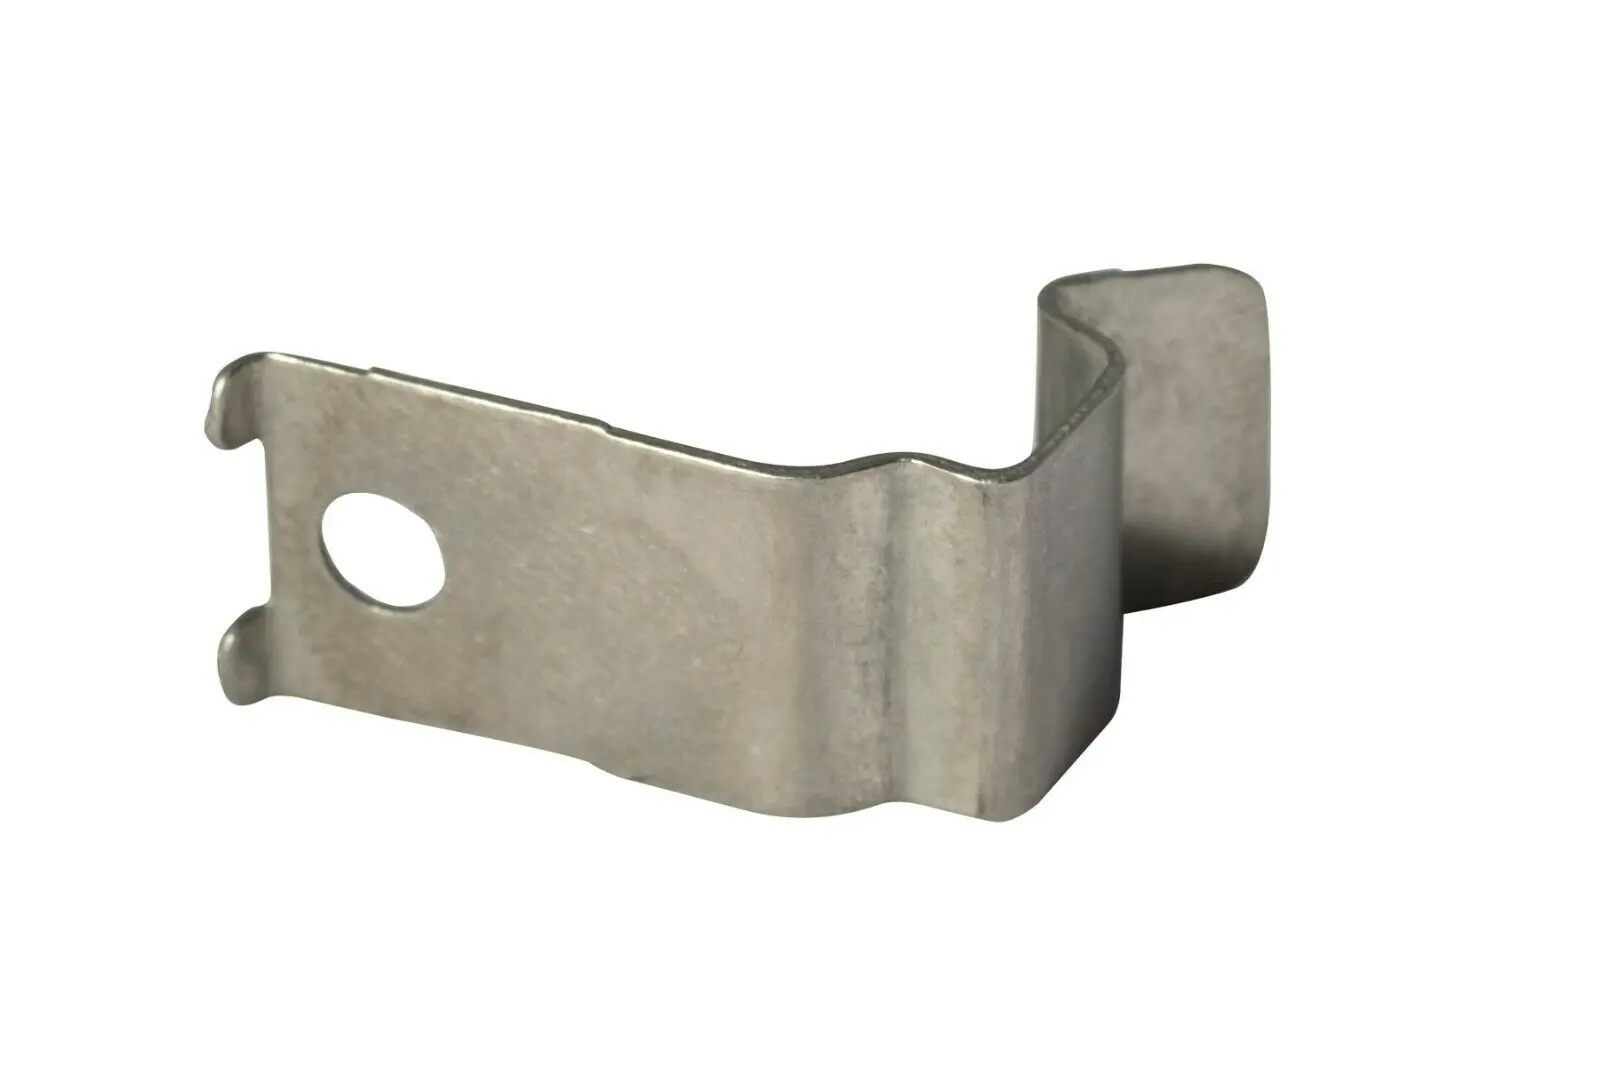 Actuator Preventie Gevangenisstraf Rowenta spring clip lock plates grill pan XL800 8820 GC6010 GR6000  GR6010|Vacuum Cleaner Parts| - AliExpress